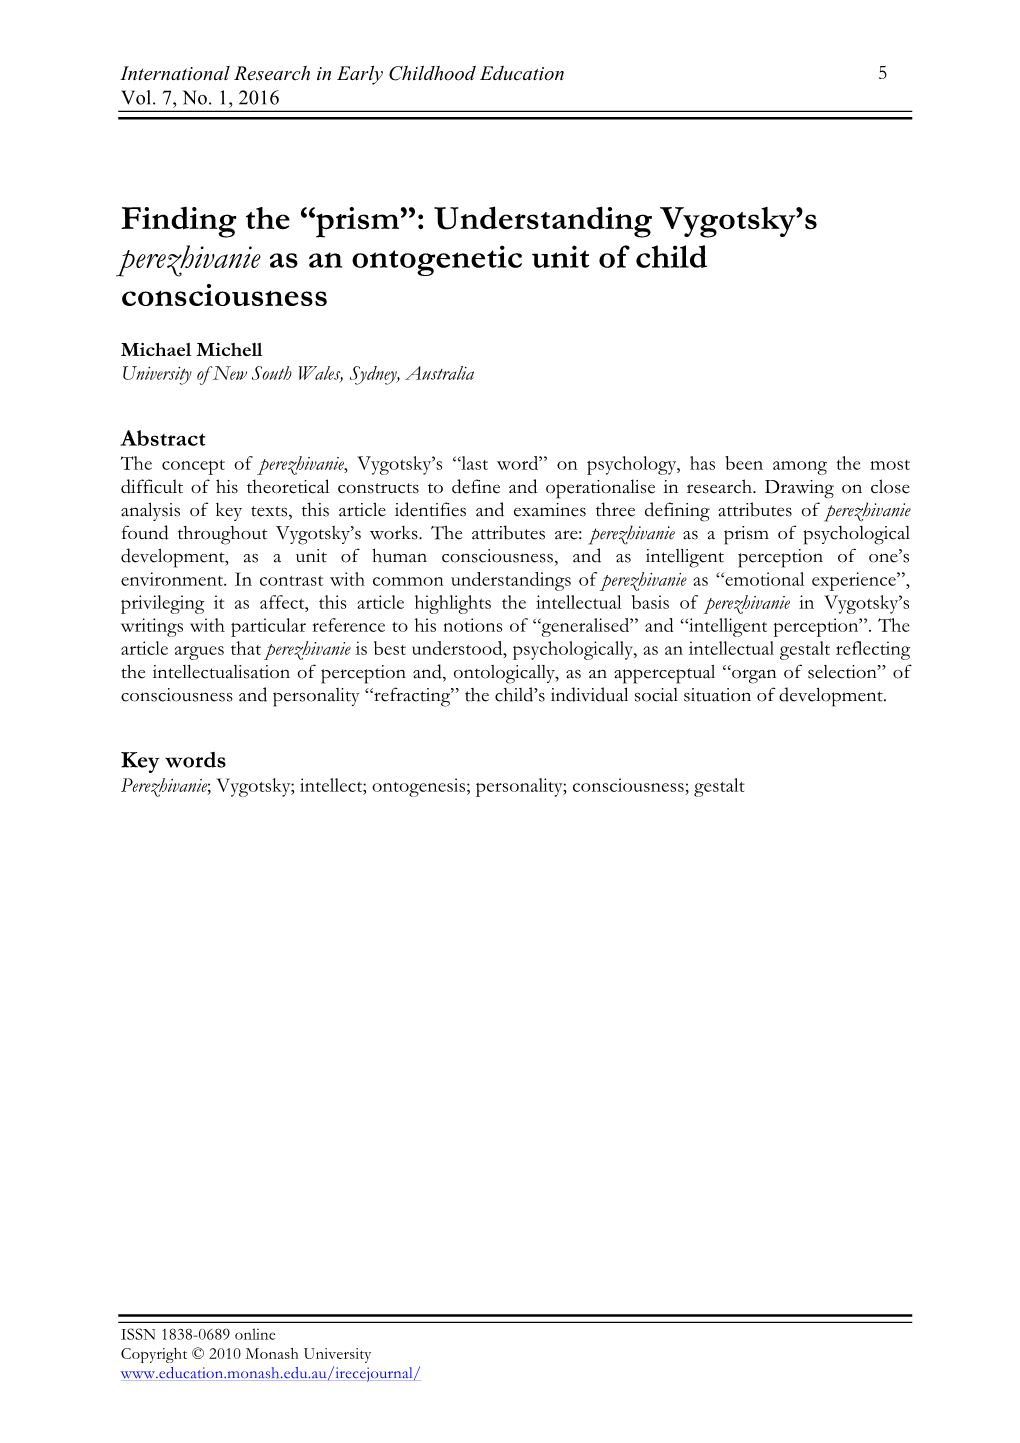 Prism”: Understanding Vygotsky’S Perezhivanie As an Ontogenetic Unit of Child Consciousness